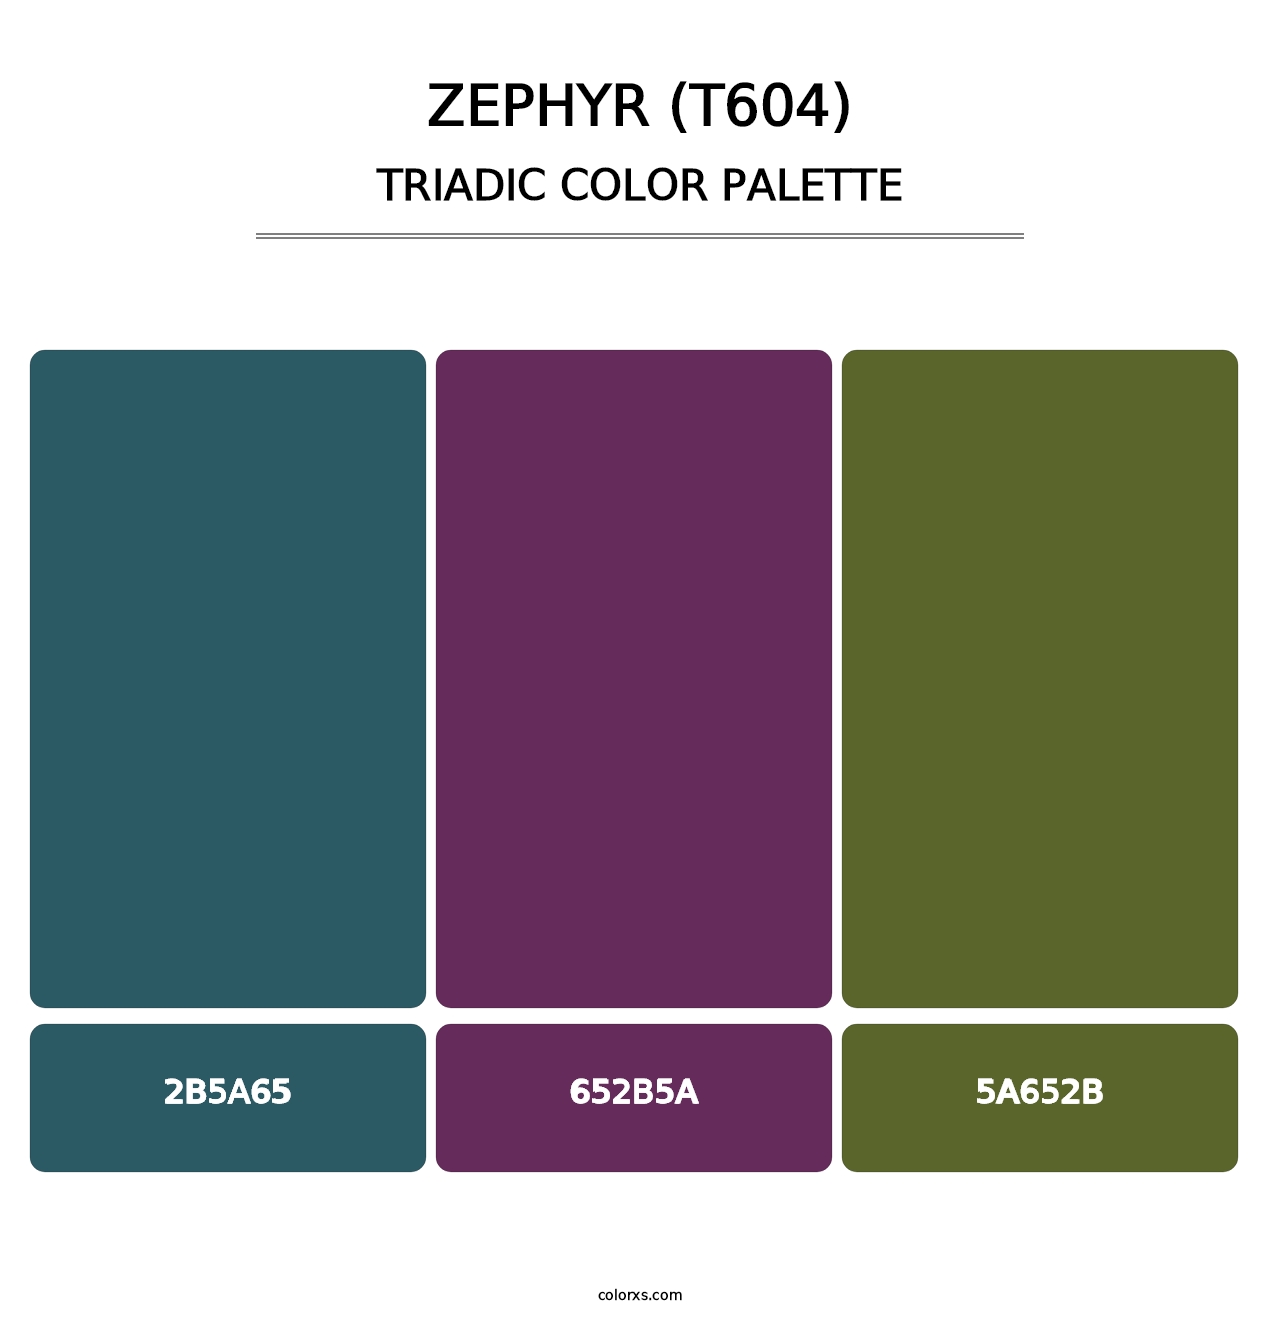 Zephyr (T604) - Triadic Color Palette